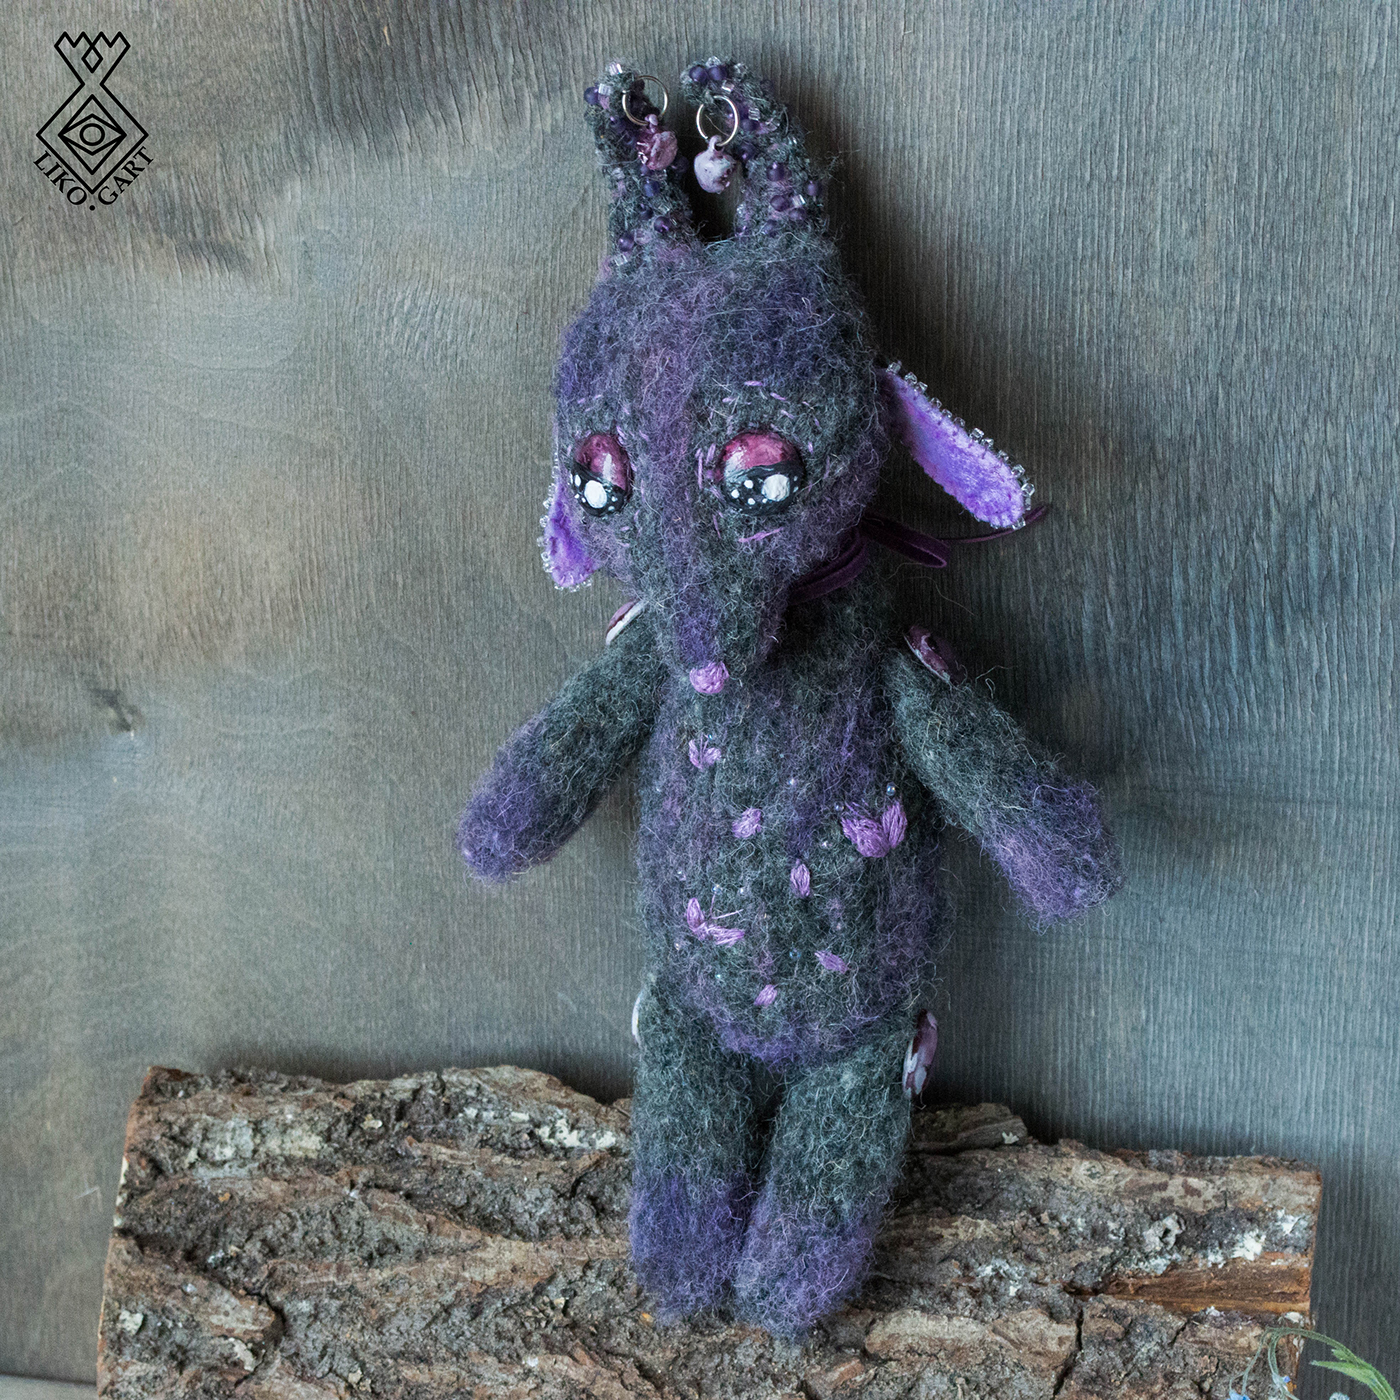 doll toy crochet amigurumi handmade violet lilac Embroidery art craft